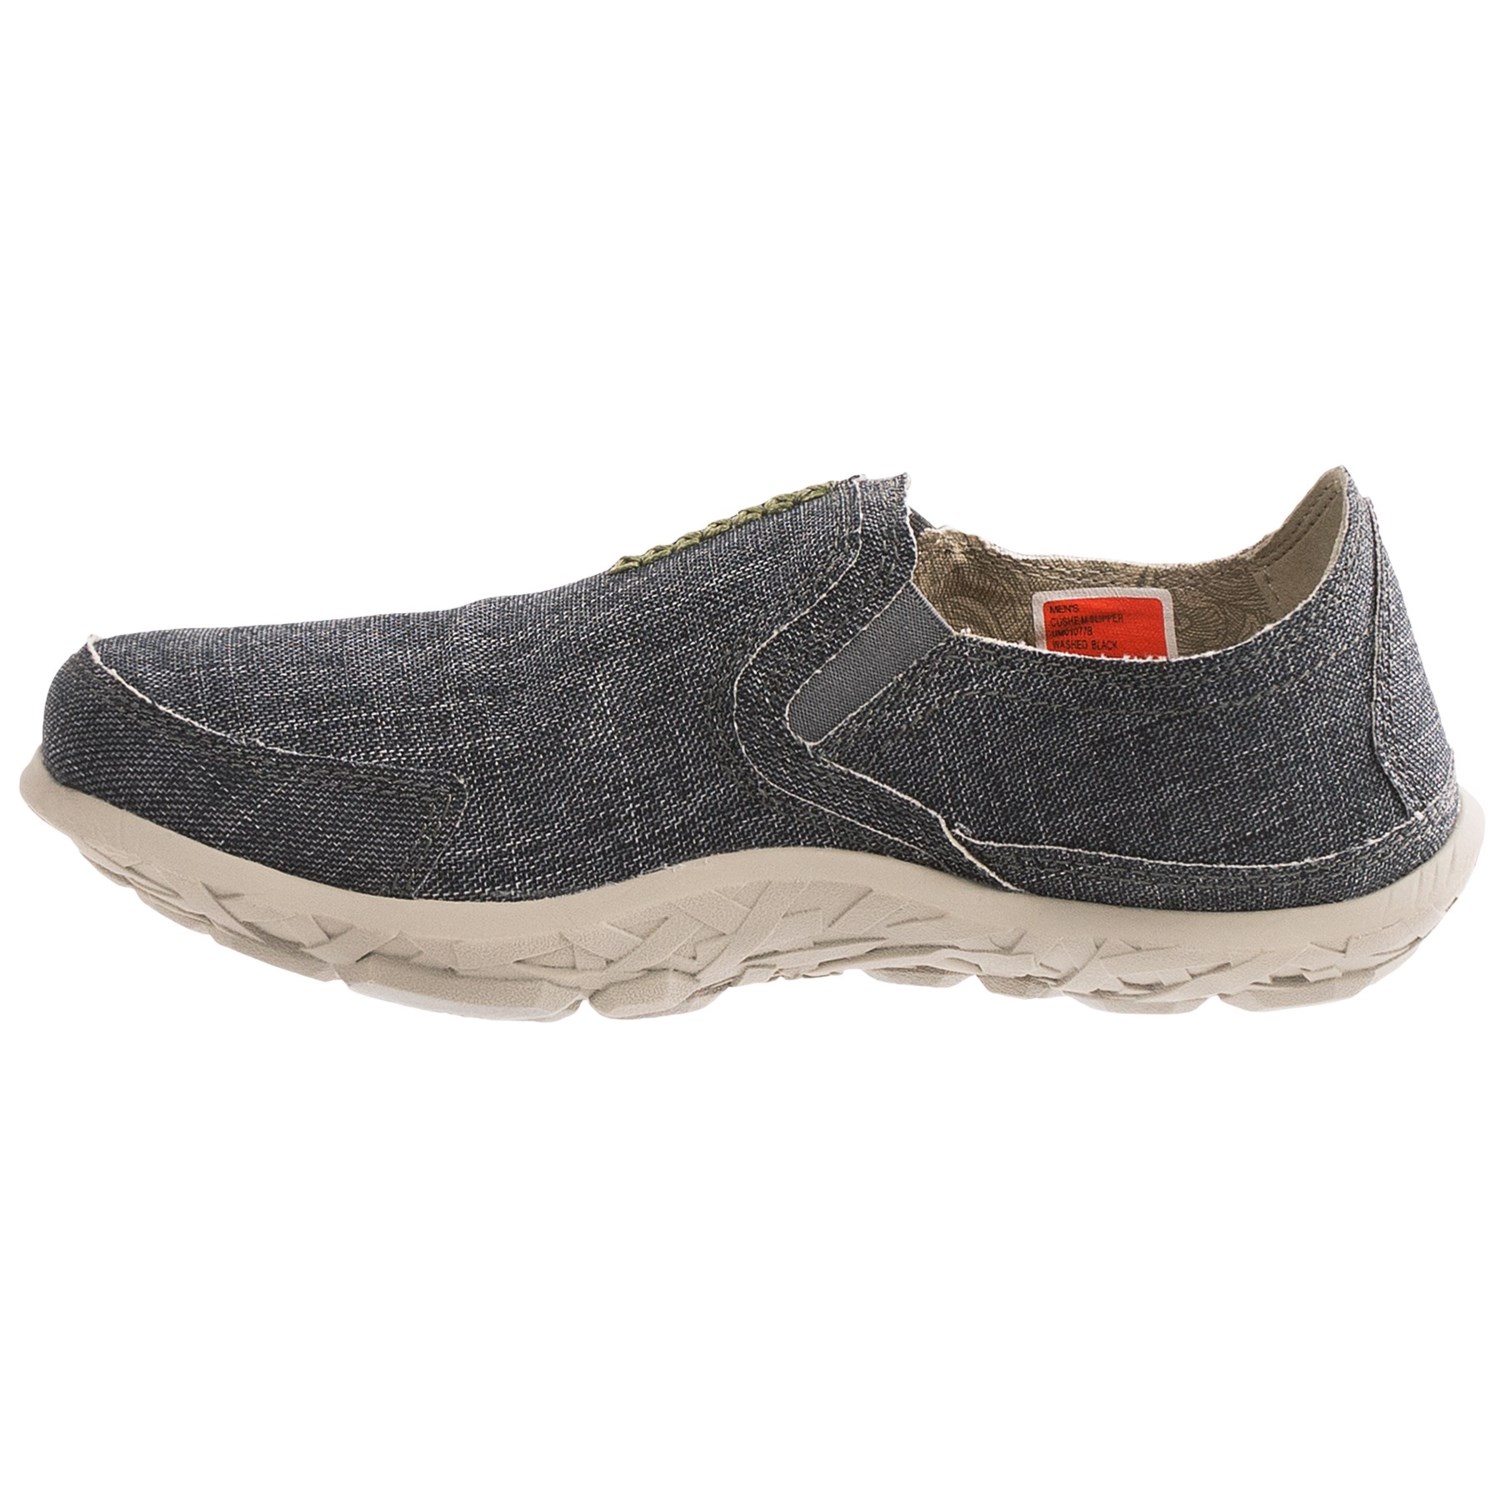 Cushe Canvas Slipper Shoes (For Men) 8477K - Save 54%